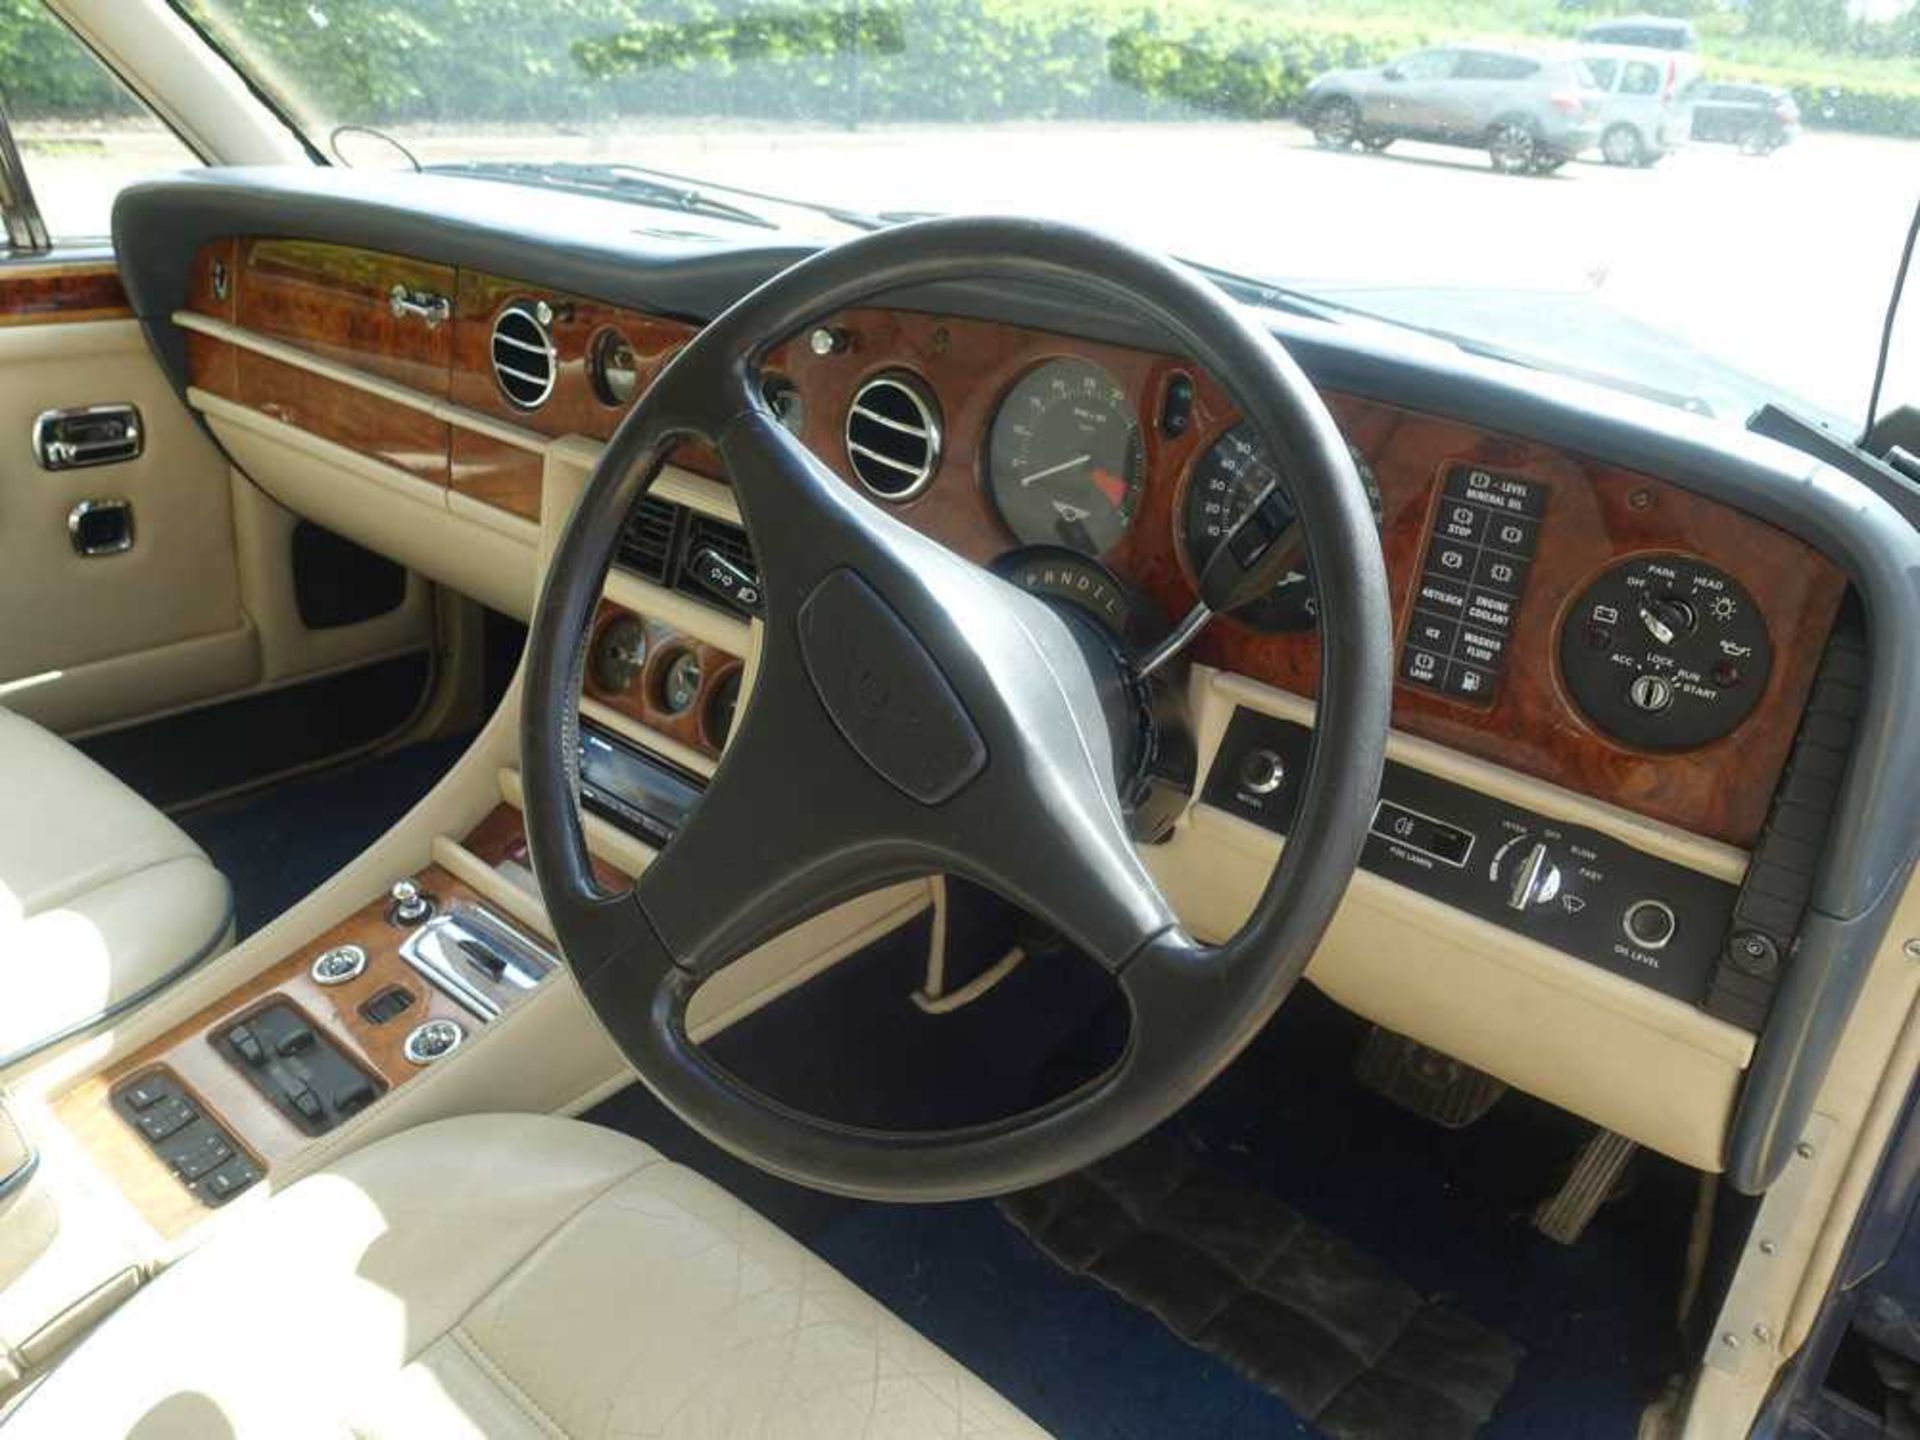 1989 (F registration) Bentley Turbo R 6750cc V8 automatic 4 door saloon in blue, registration F429 - Image 12 of 20